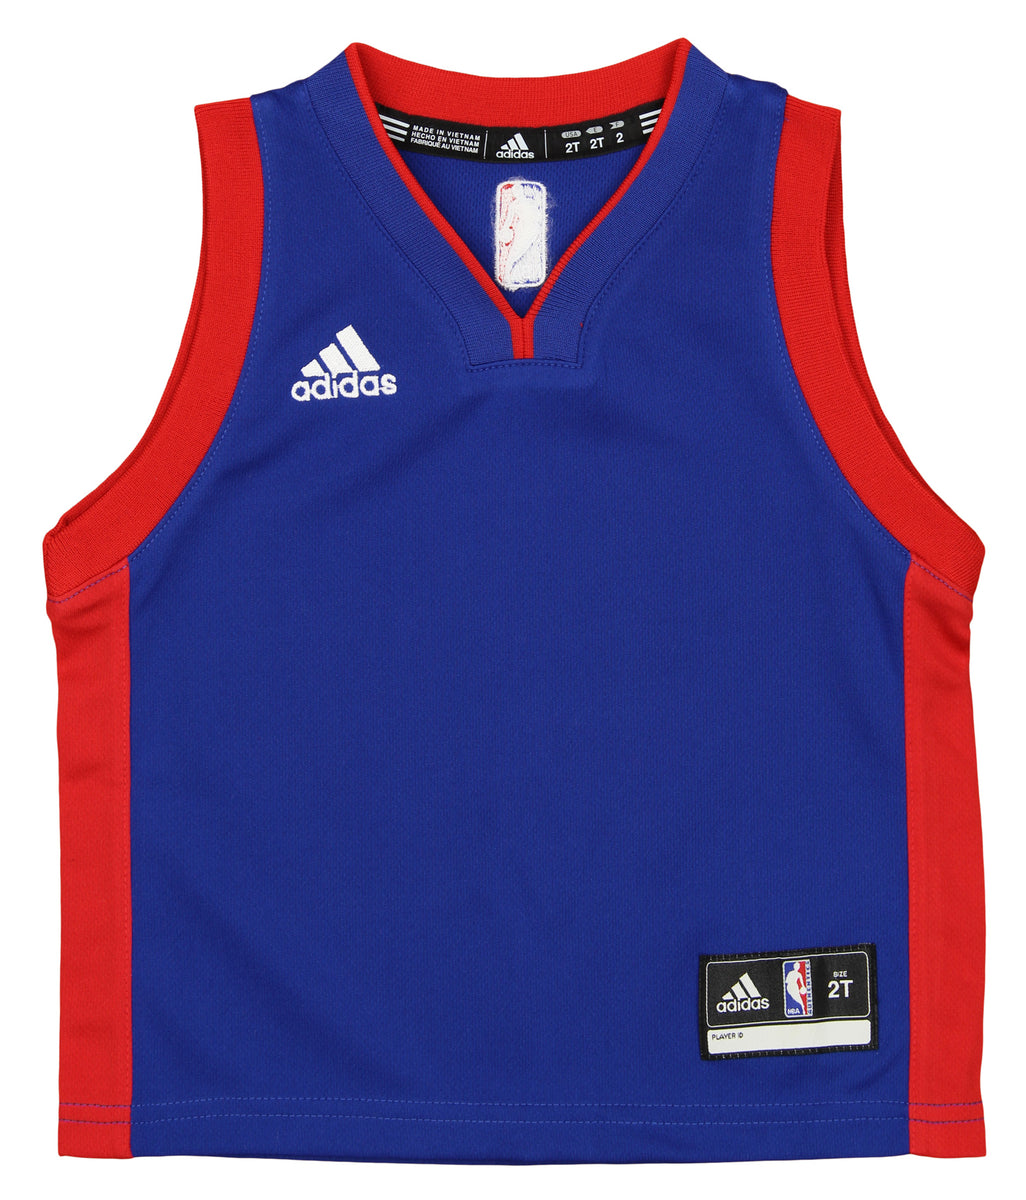 NBA Detroit Pistons 1 Adidas Jersey 